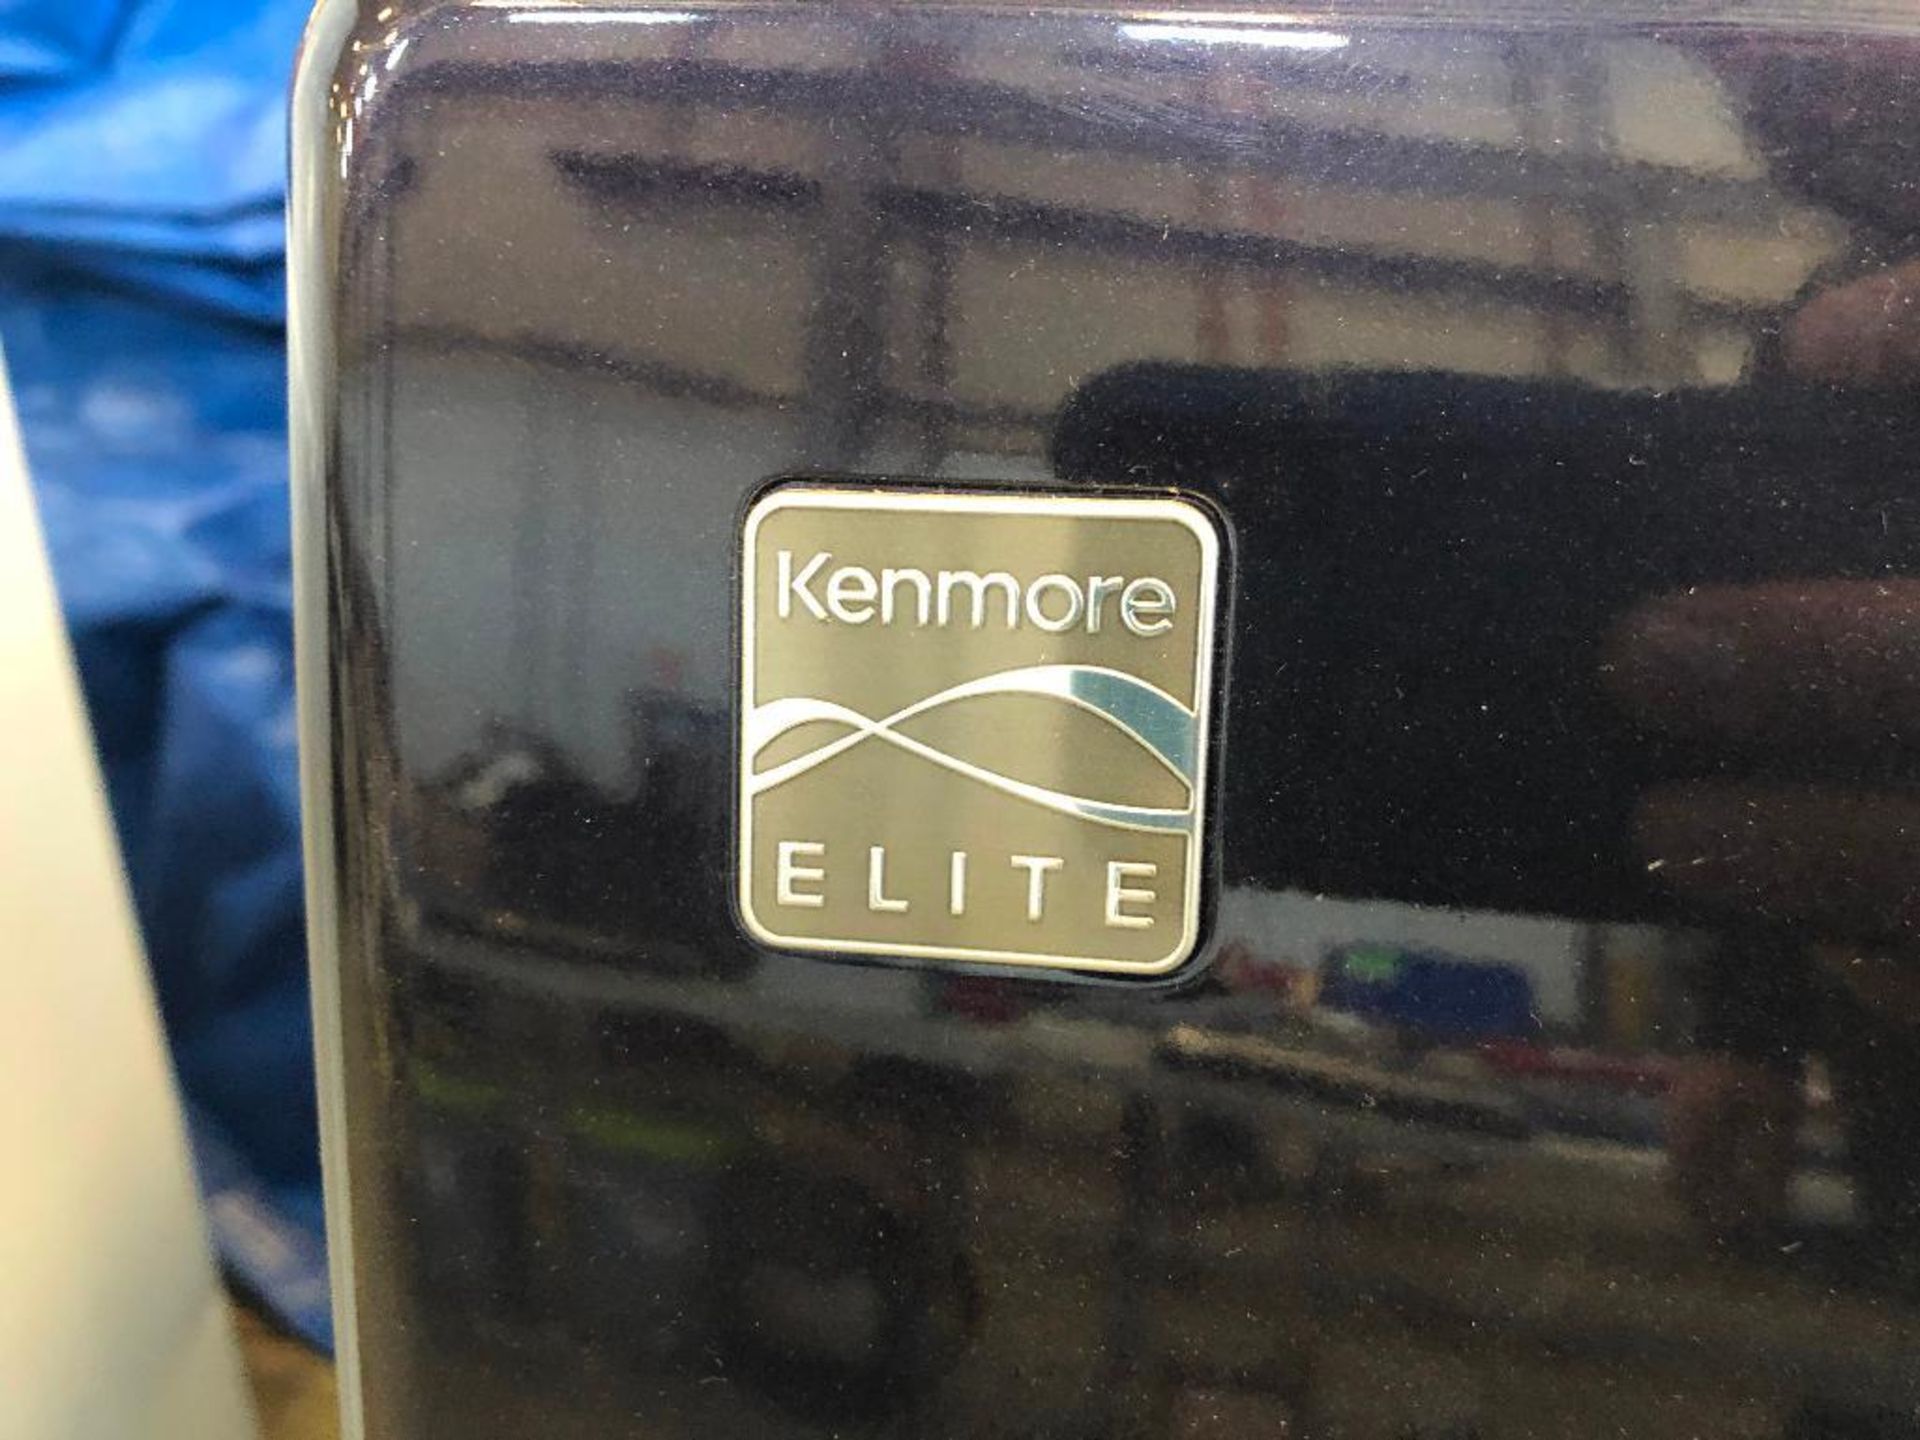 Kenmore Elite 592-89003 Steam Dryer - Image 3 of 4